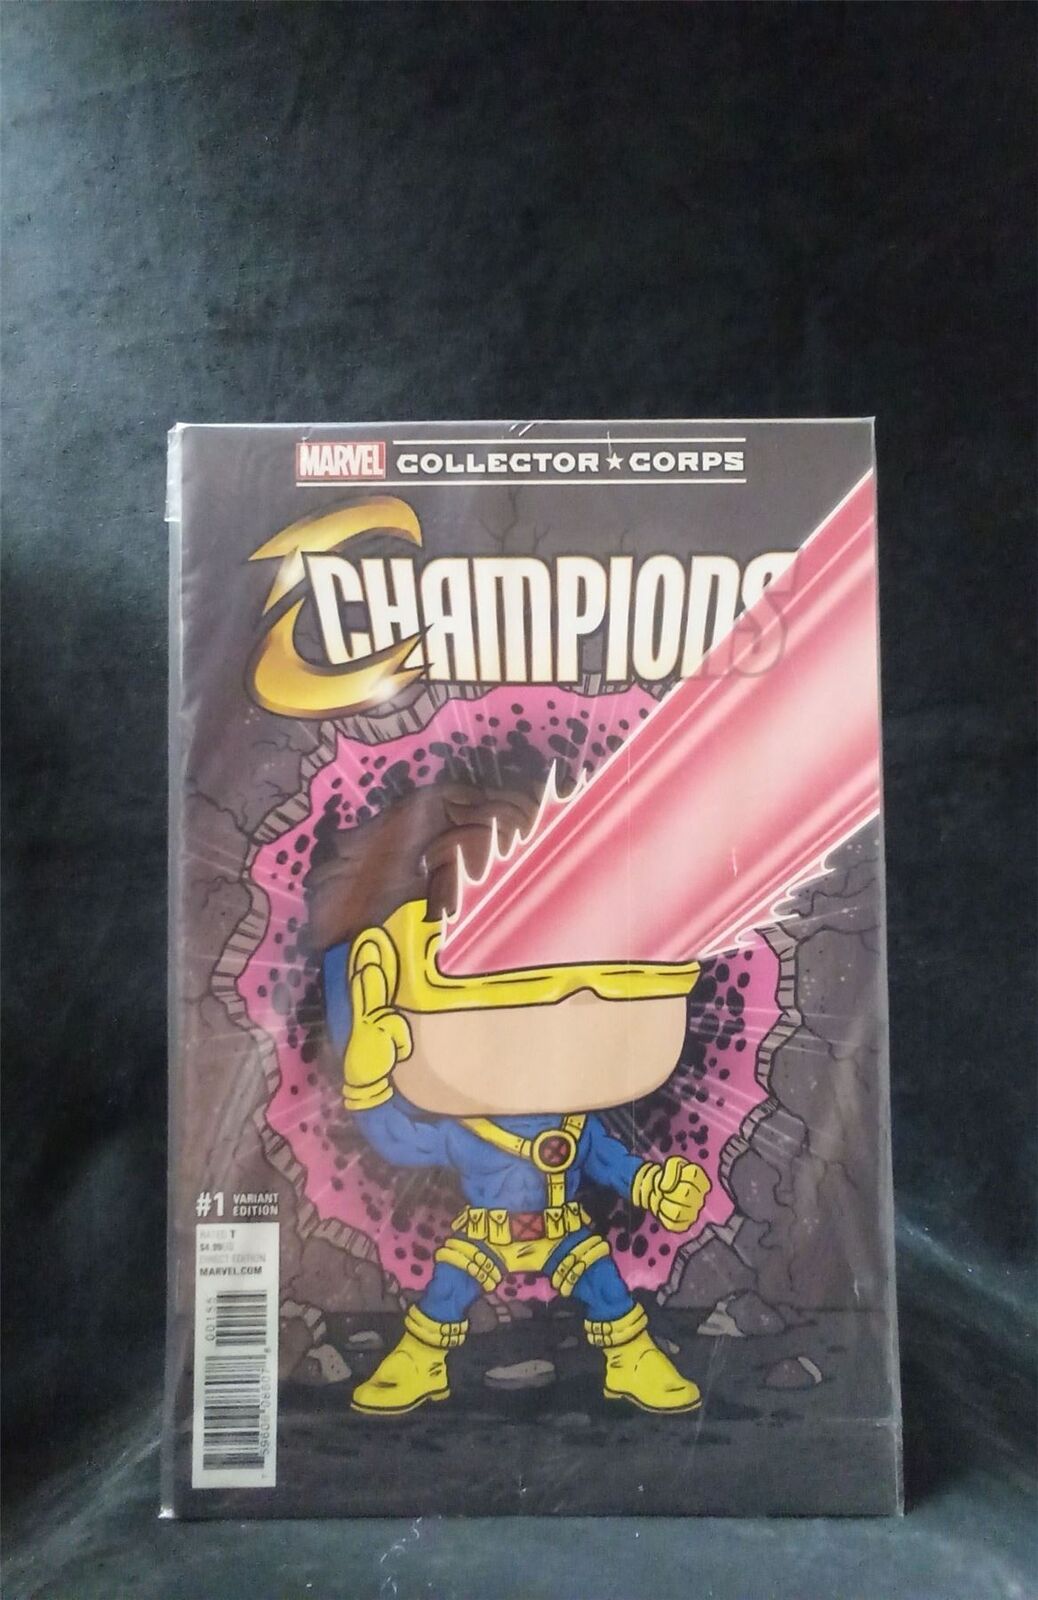 Champions #1 Marvel Collectors Corp Cover 2016 Marvel Comics Comic Book 